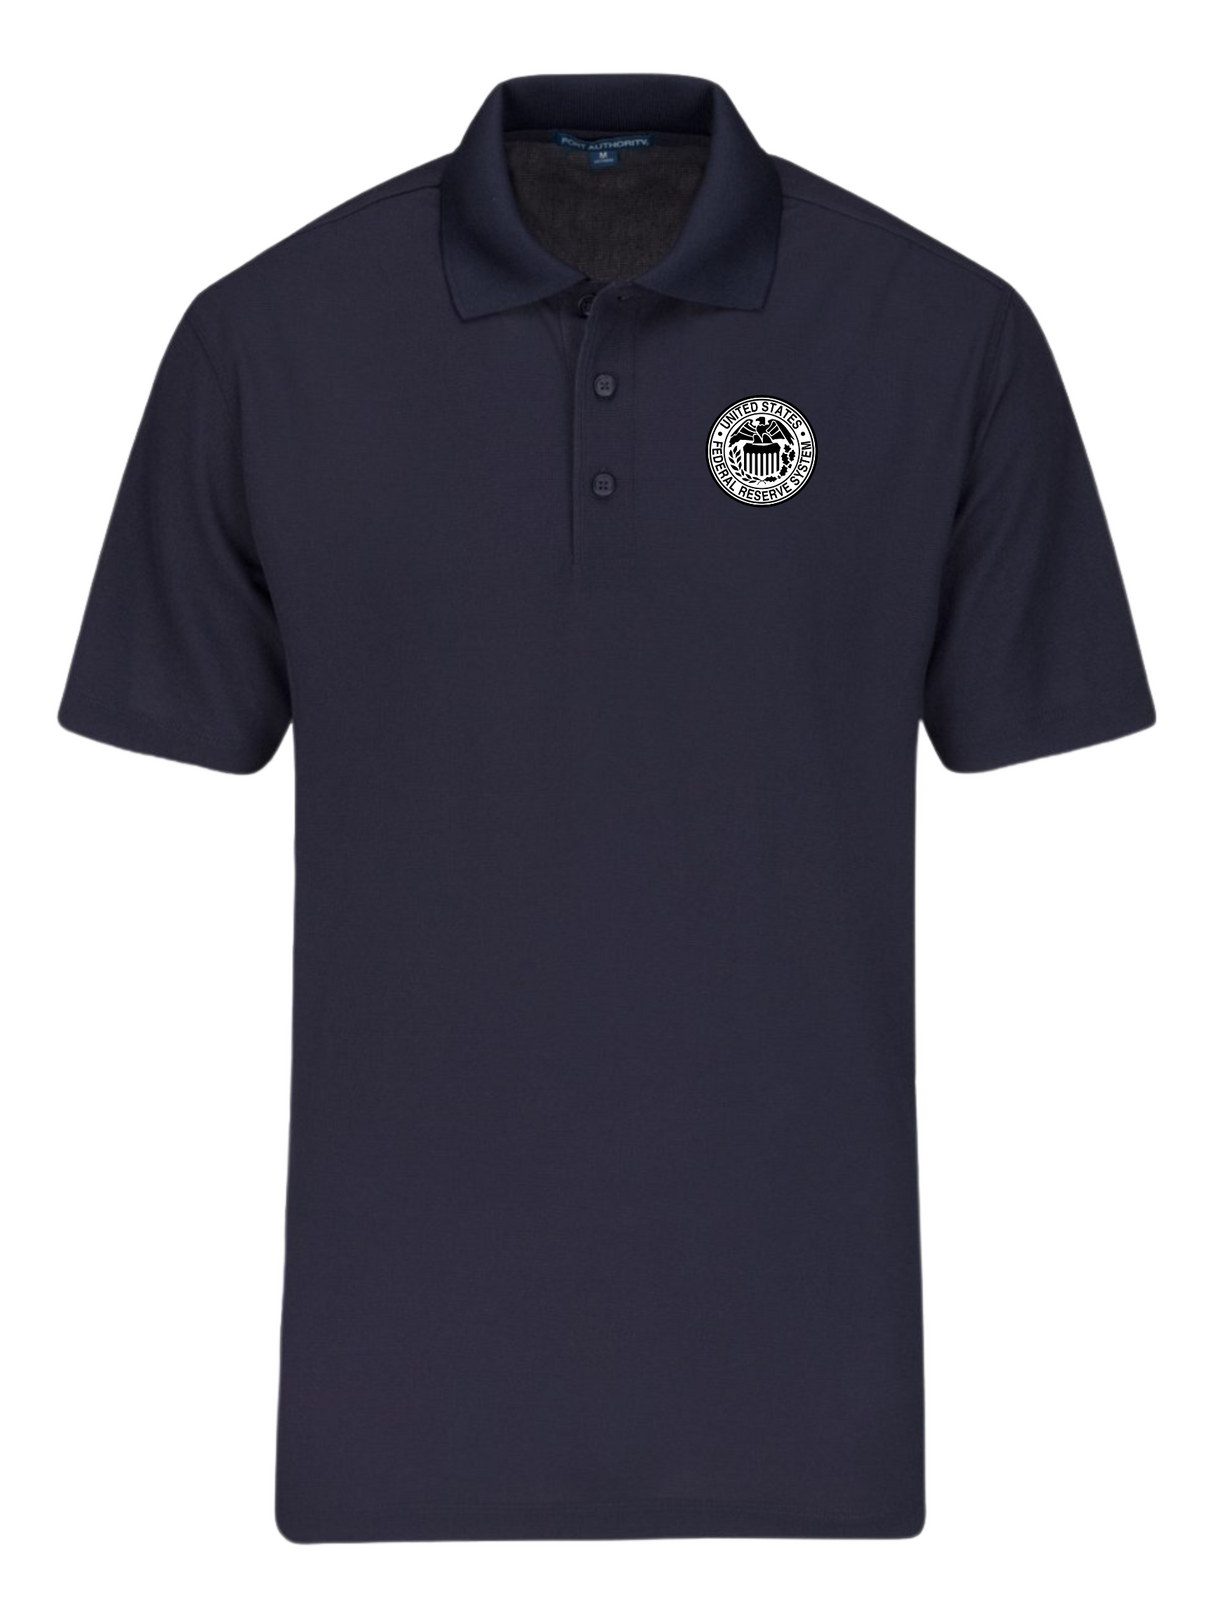 FRS Polo Shirt - Men's Short Sleeve - FEDS Apparel